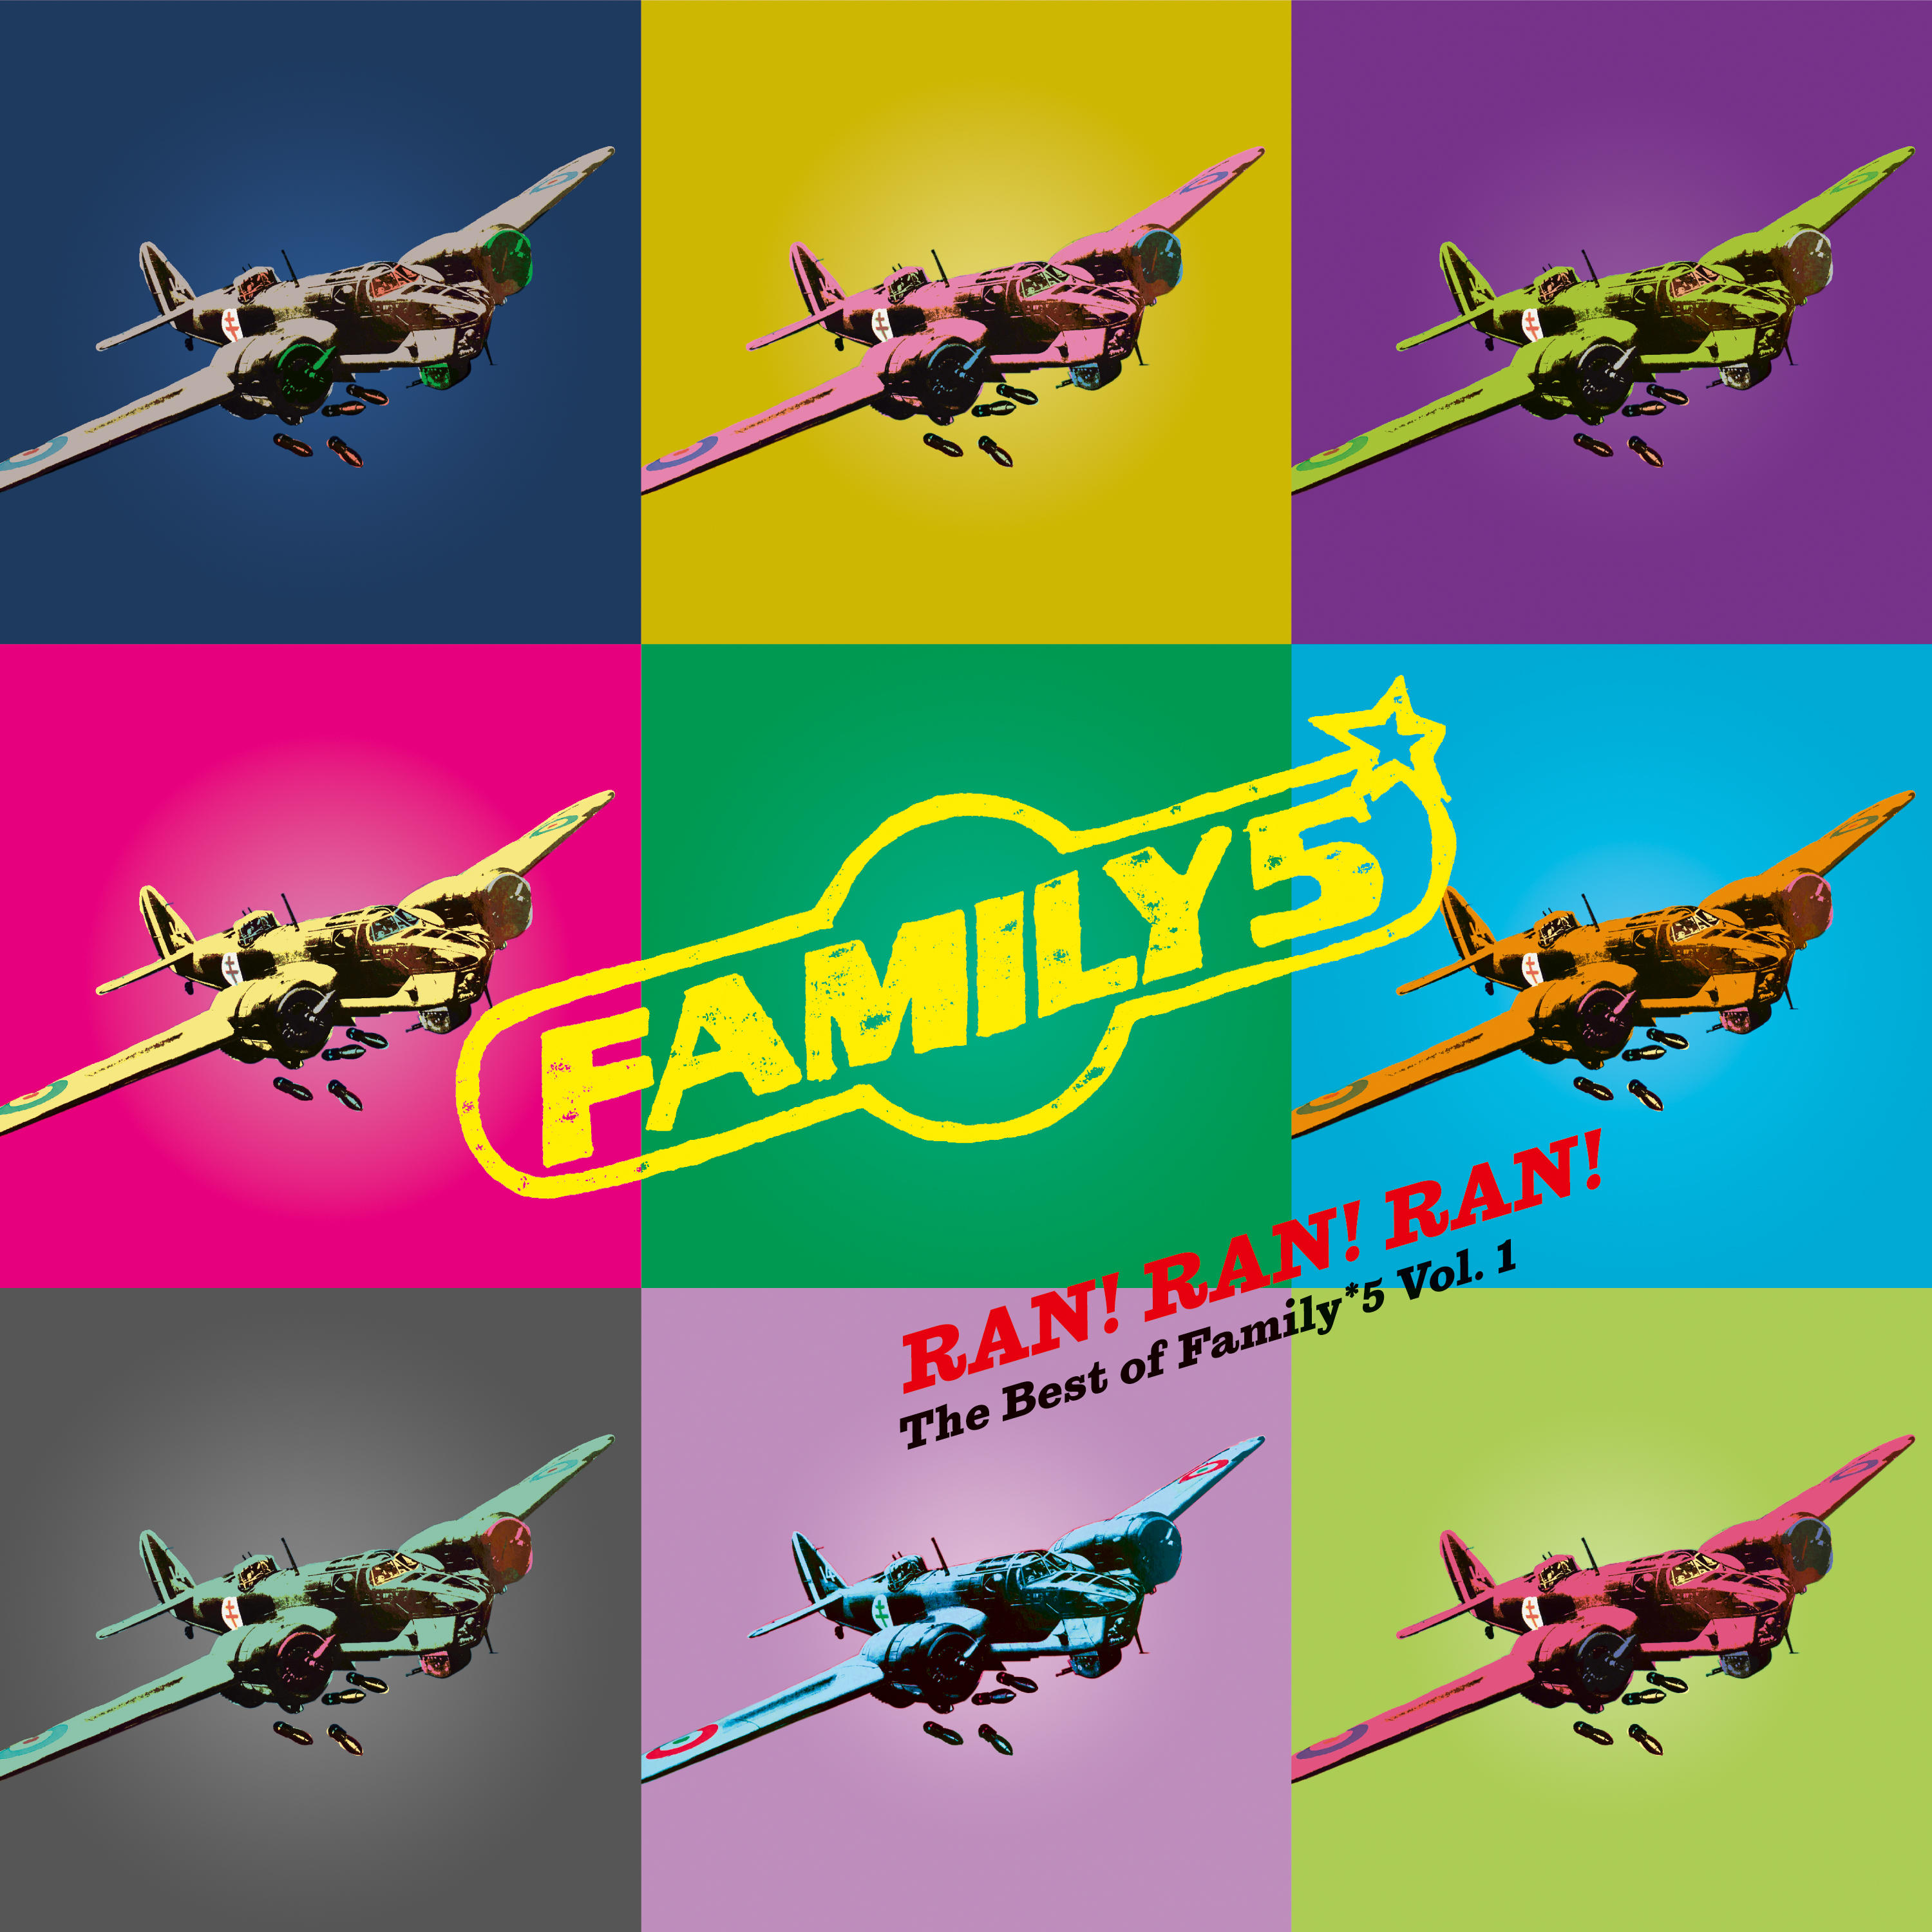 Family*5 - Ran! Ran! Ran! The Best Of Family*5 Vol. 1